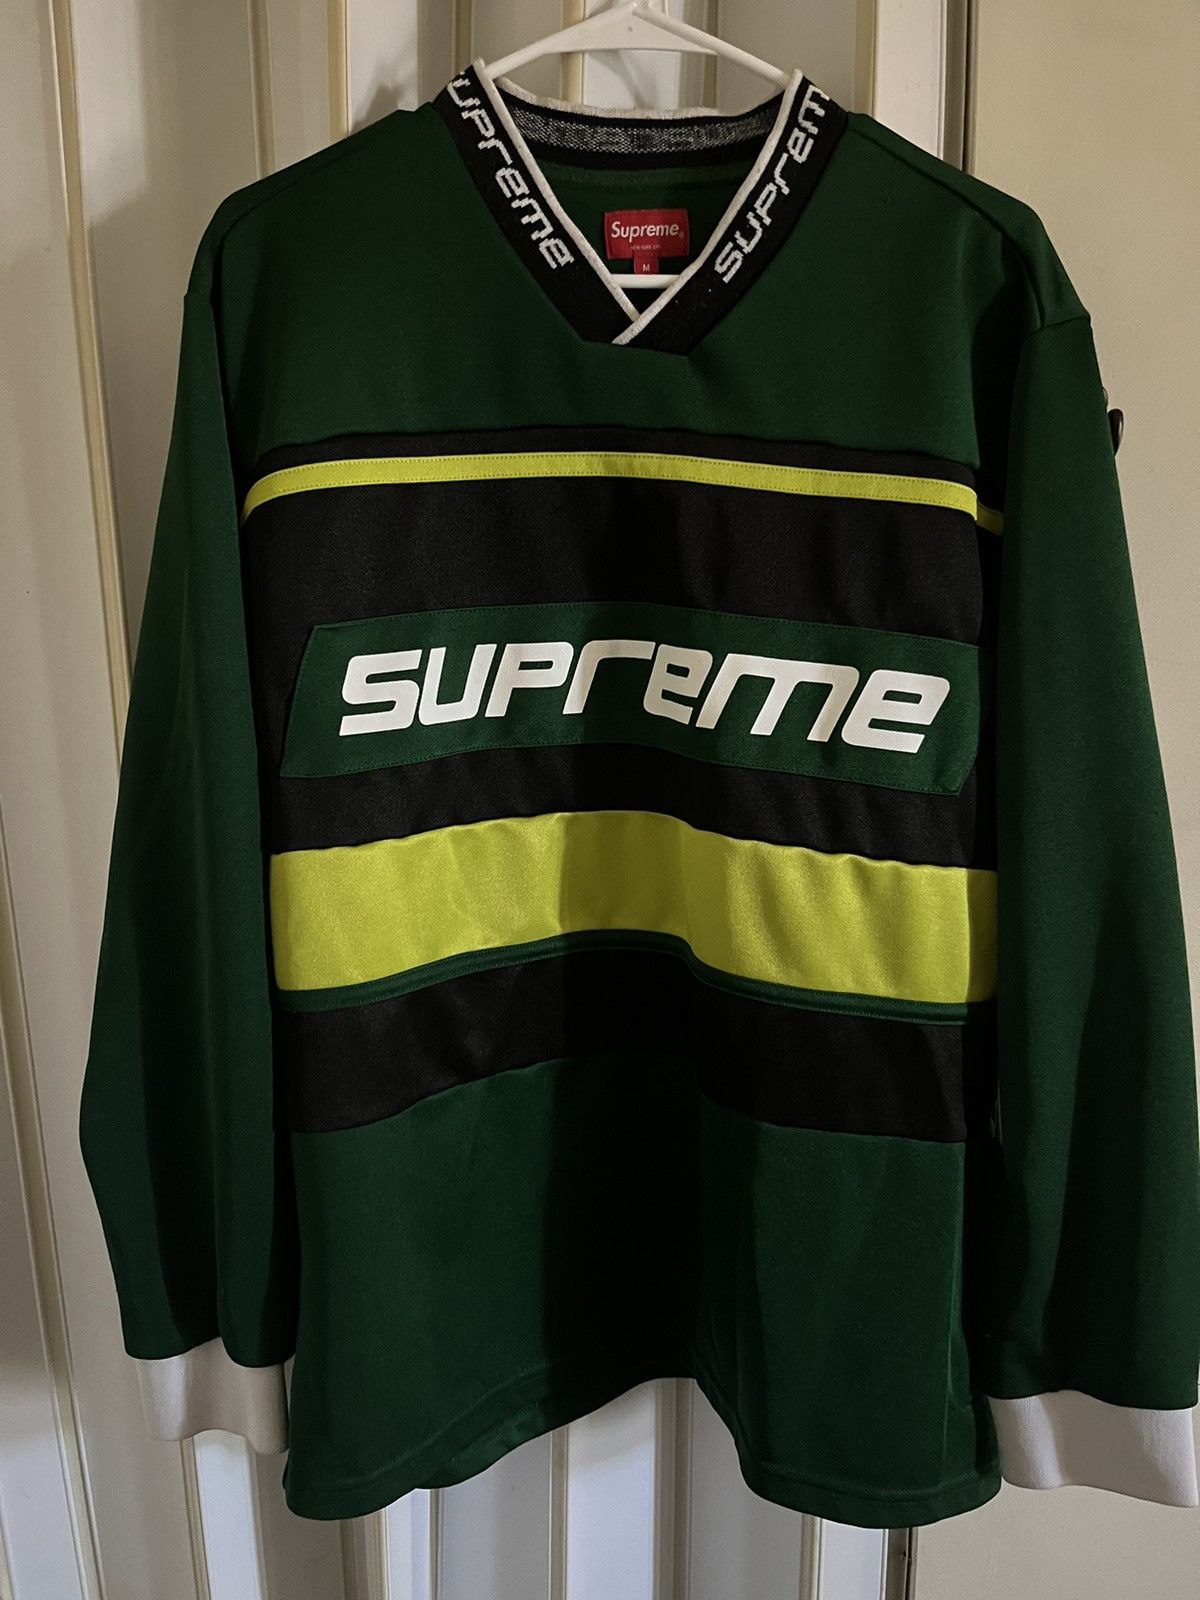 Supreme Supreme Warm Up Hockey Jersey | Grailed